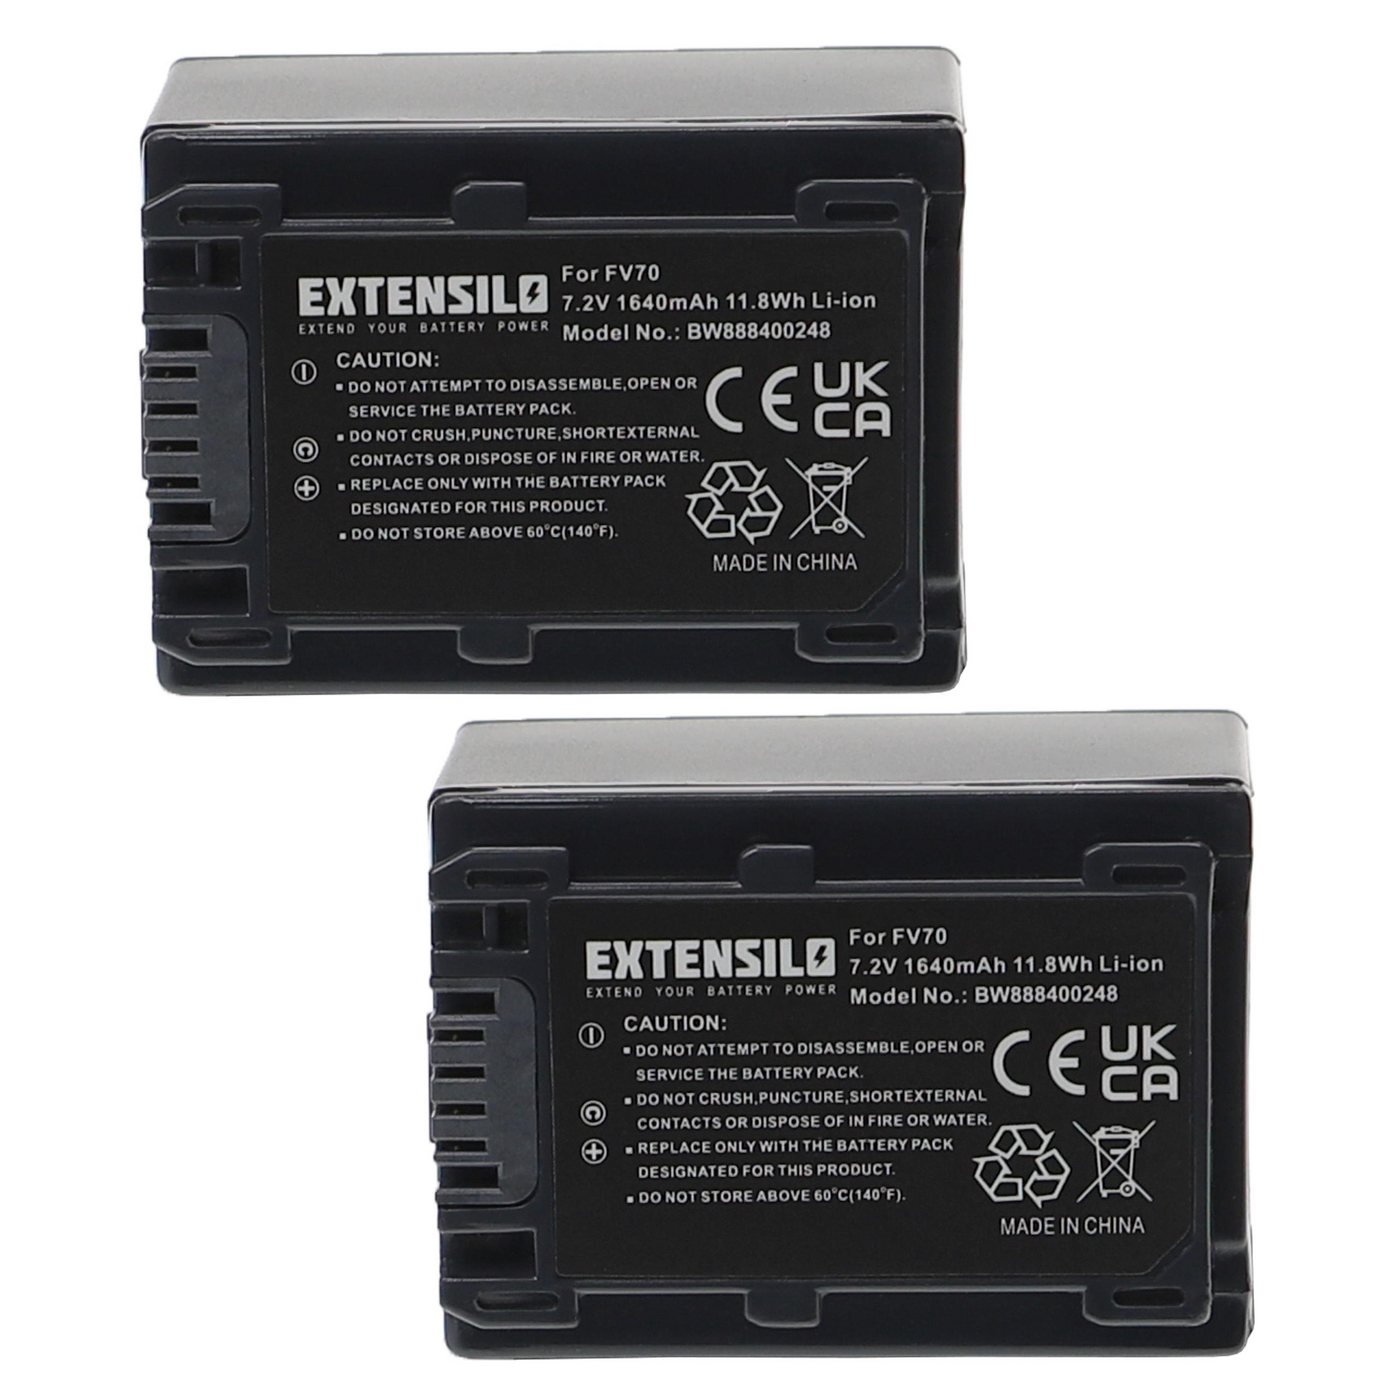 Extensilo passend für Sony HDR-CX300, HDR-CX300E, HDR-CX305E, HDR-CX280EB, HDR-CX260VE, HDR-CX280E Kamera / Foto DSLR / Camcorder Analog / Camcorder Digital (1640mAh, 7,2V, Li-Ion) Kamera-Akku 1640 mAh von Extensilo